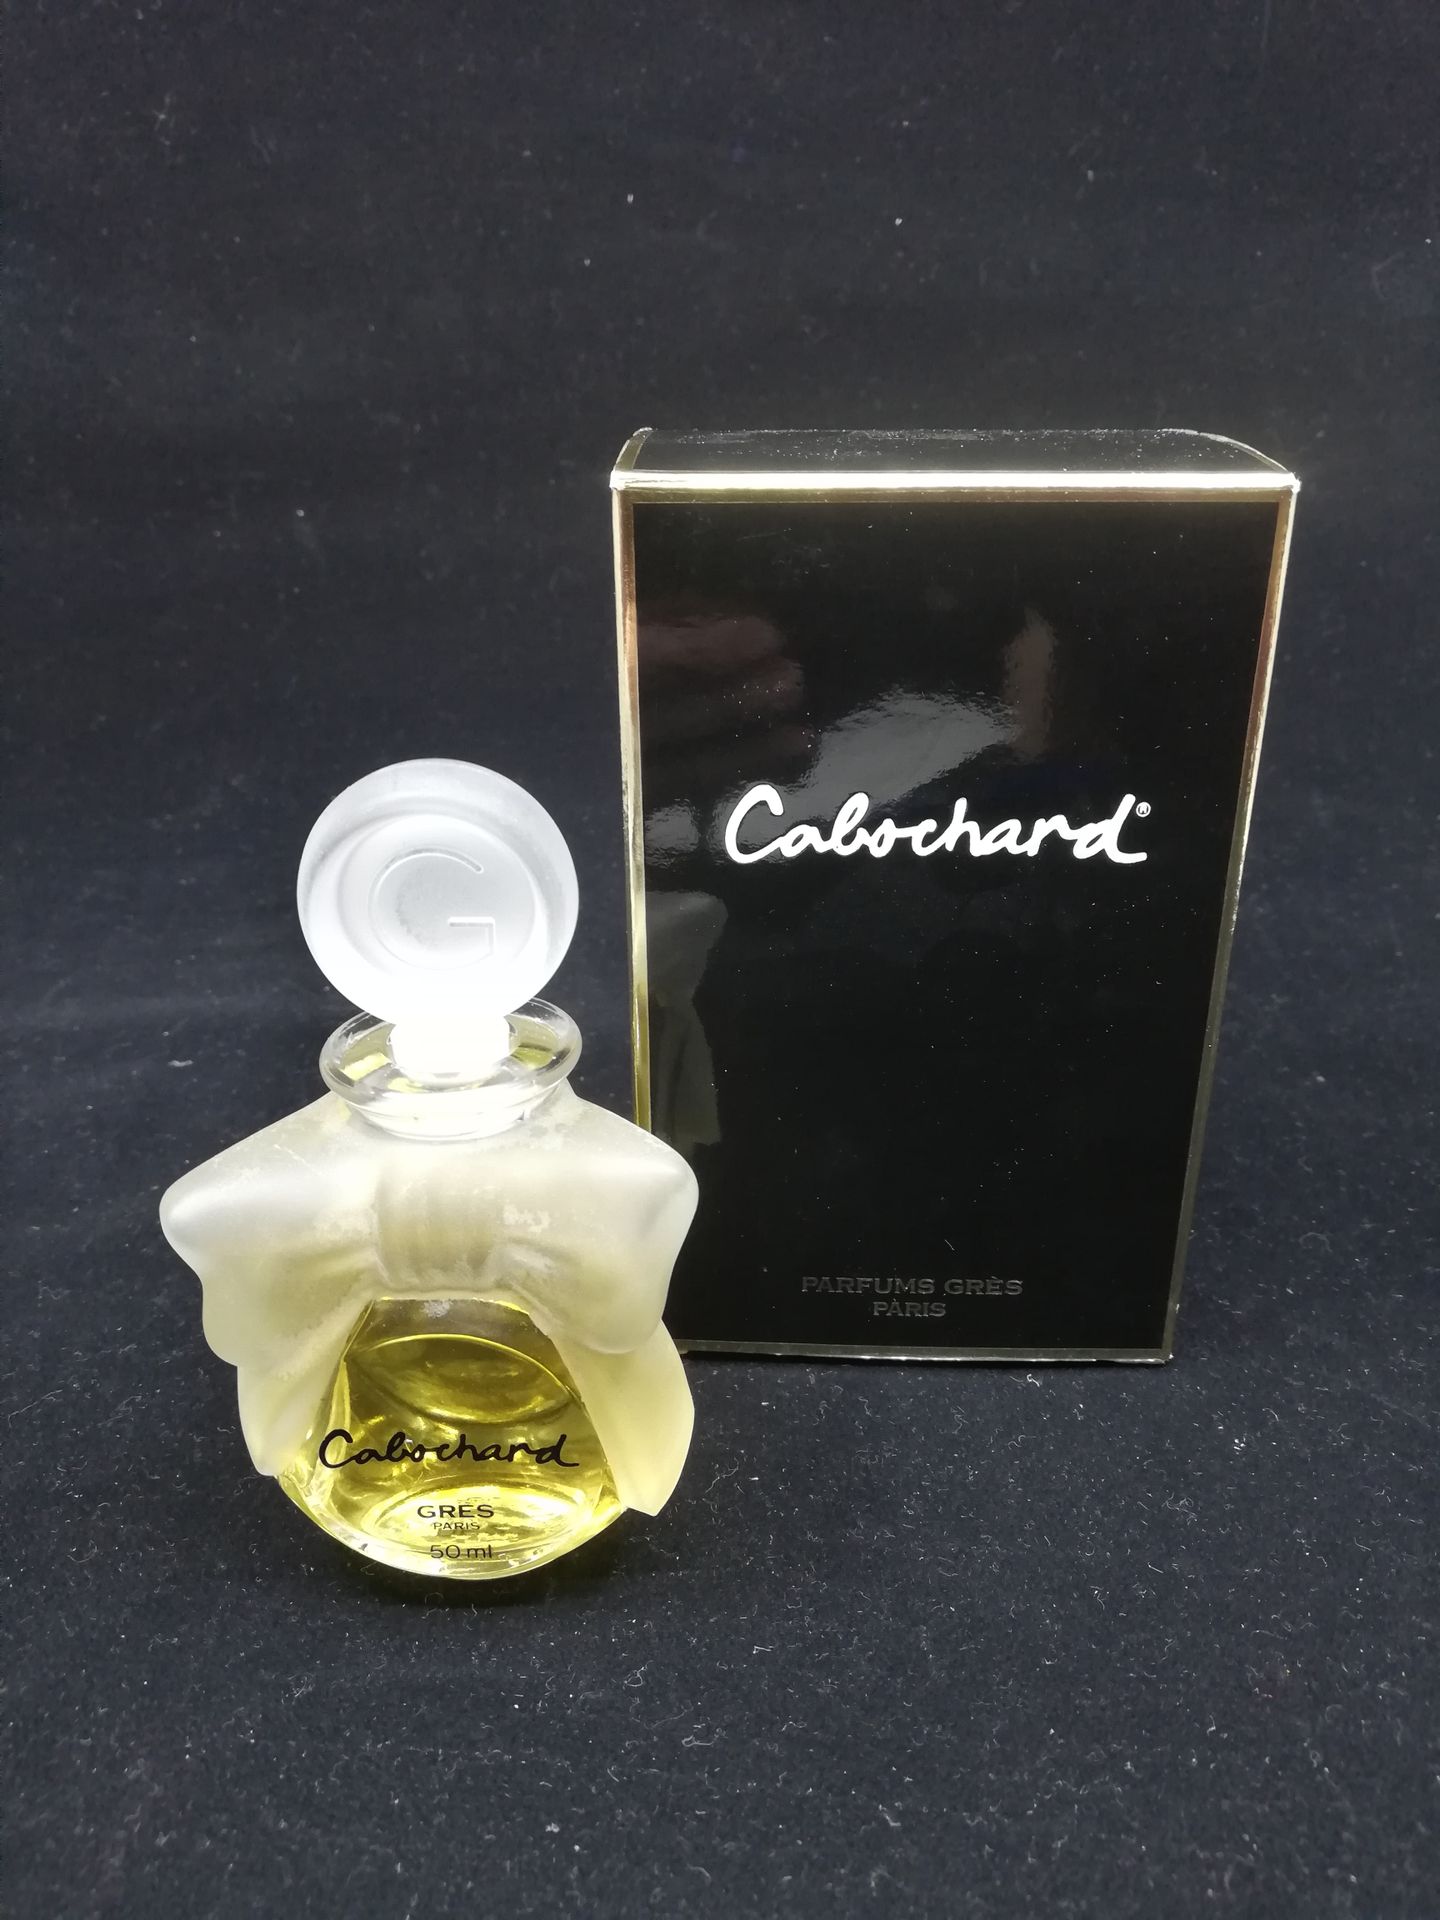 Null 石器 - "Cabochard" - (1959年)

装在带有标题的黑色硬纸盒中，瓶子里有50毫升的淡香水。